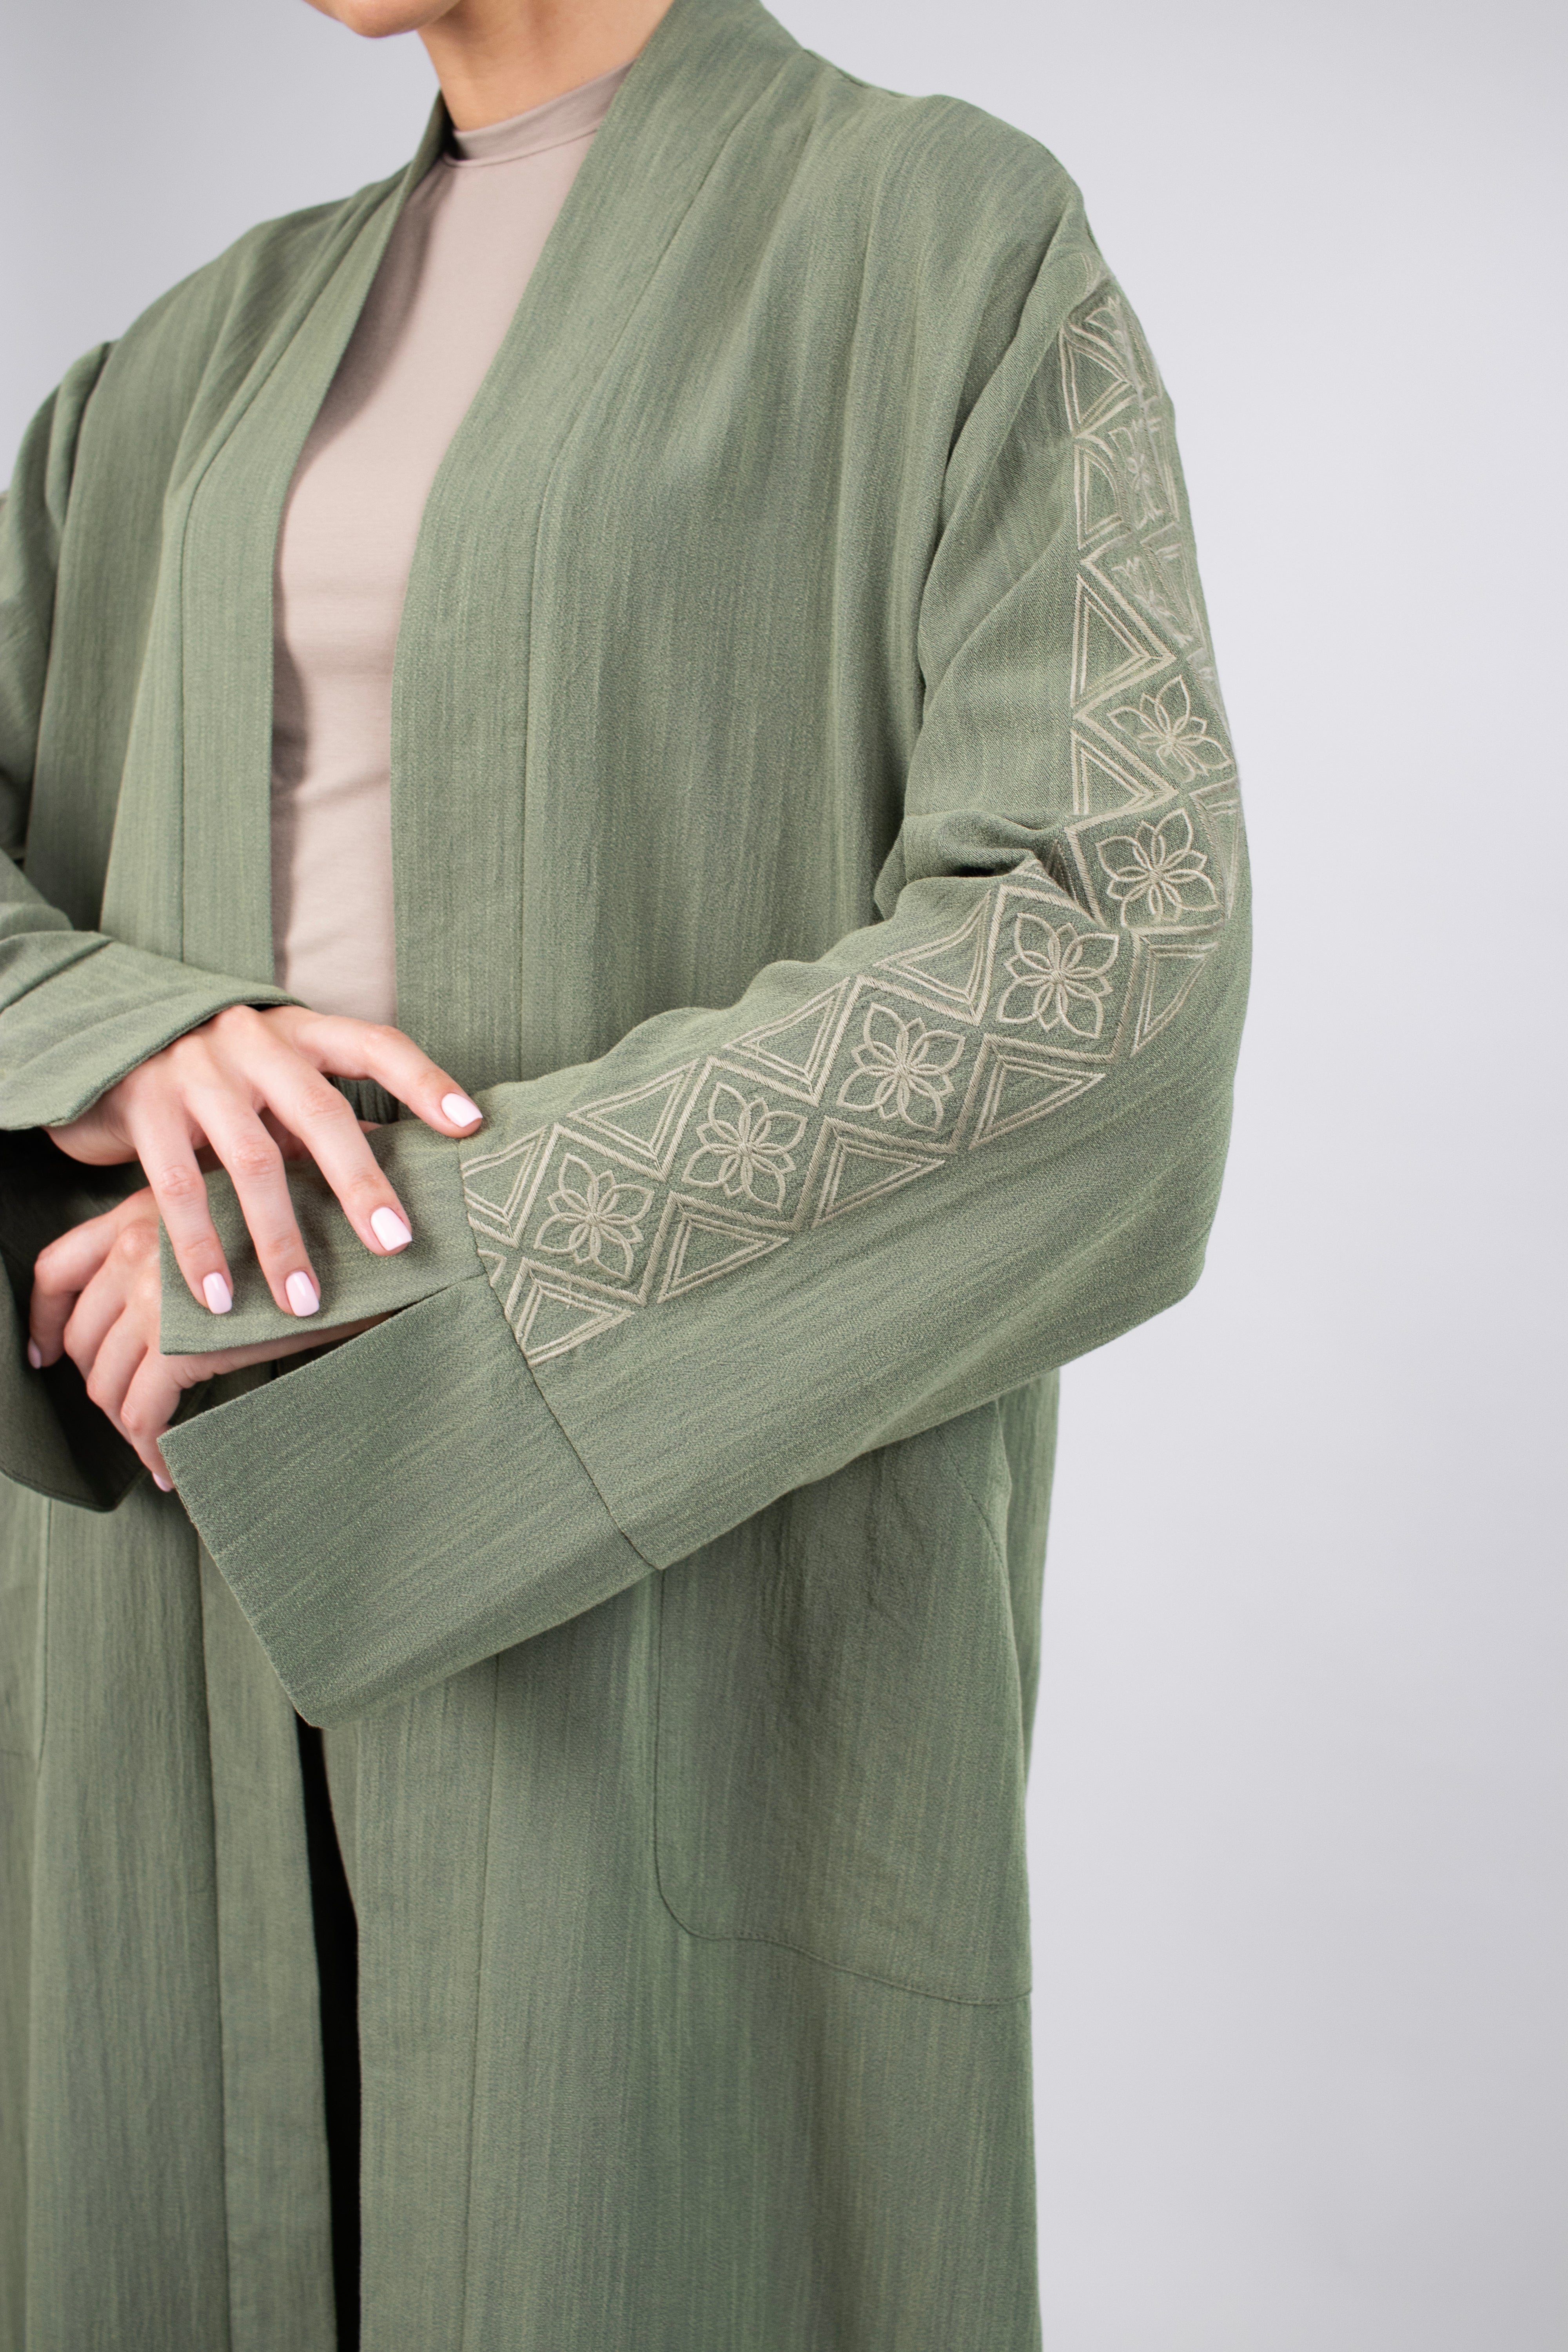 AE - Embroidered Sleeve Abaya - Desert Green